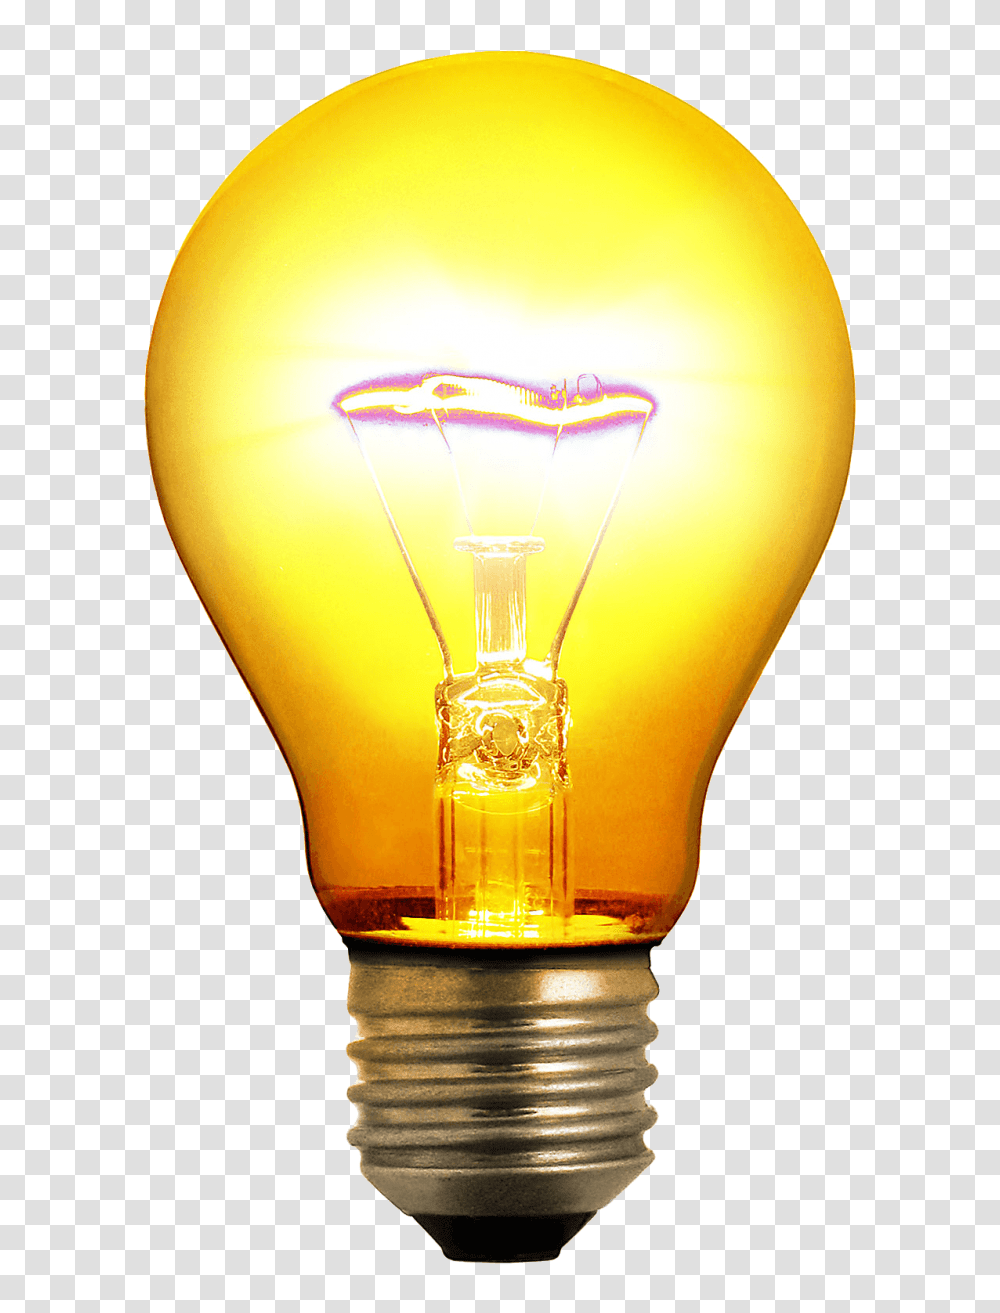 Download Yellow Light Bulb Image Hq Image Freepngimg, Lamp, Lightbulb Transparent Png